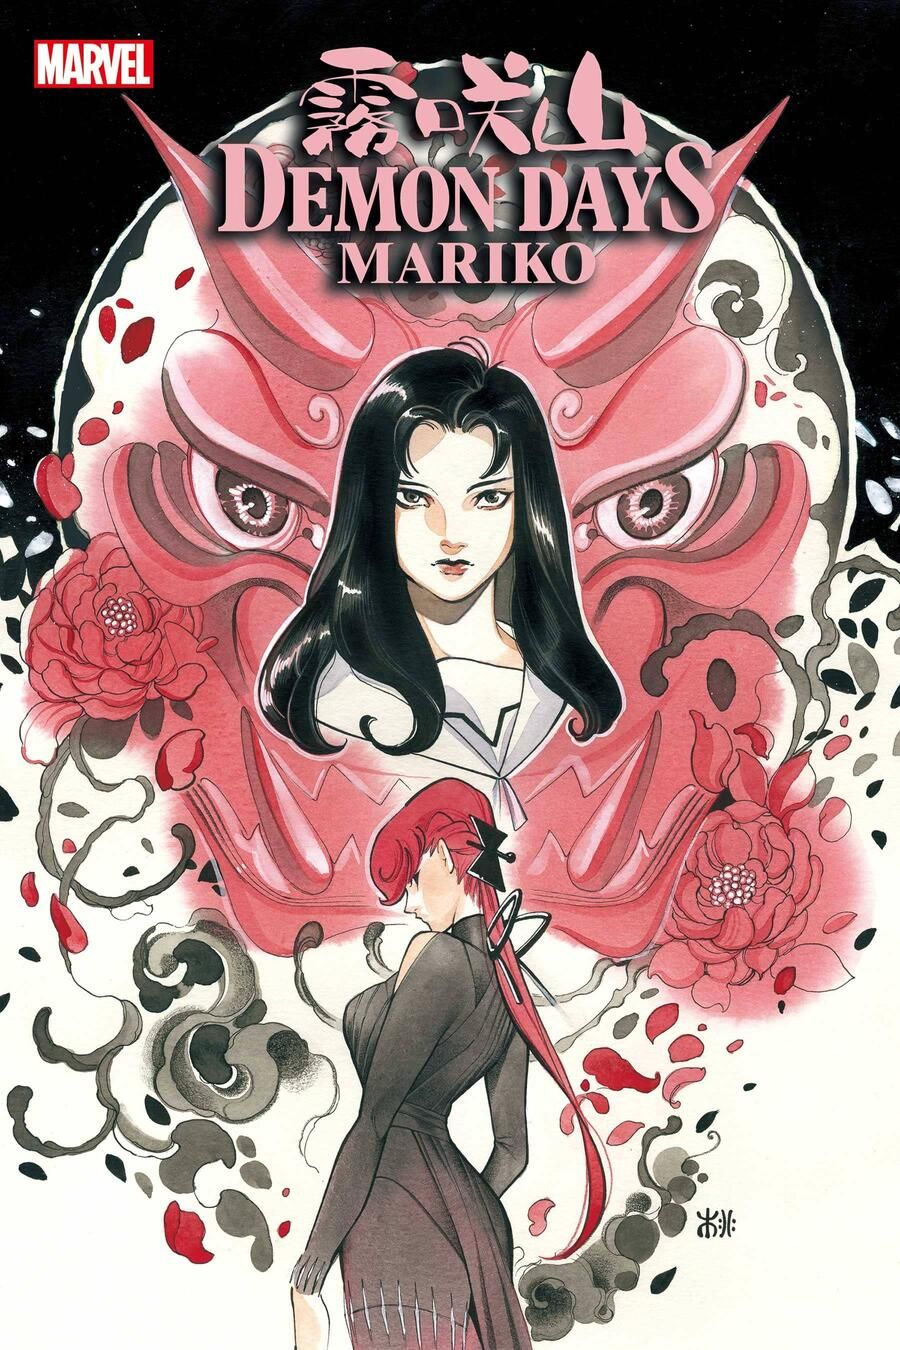 Peach Momoko’s Demon Days Continues in Stunning New Chapter Mariko